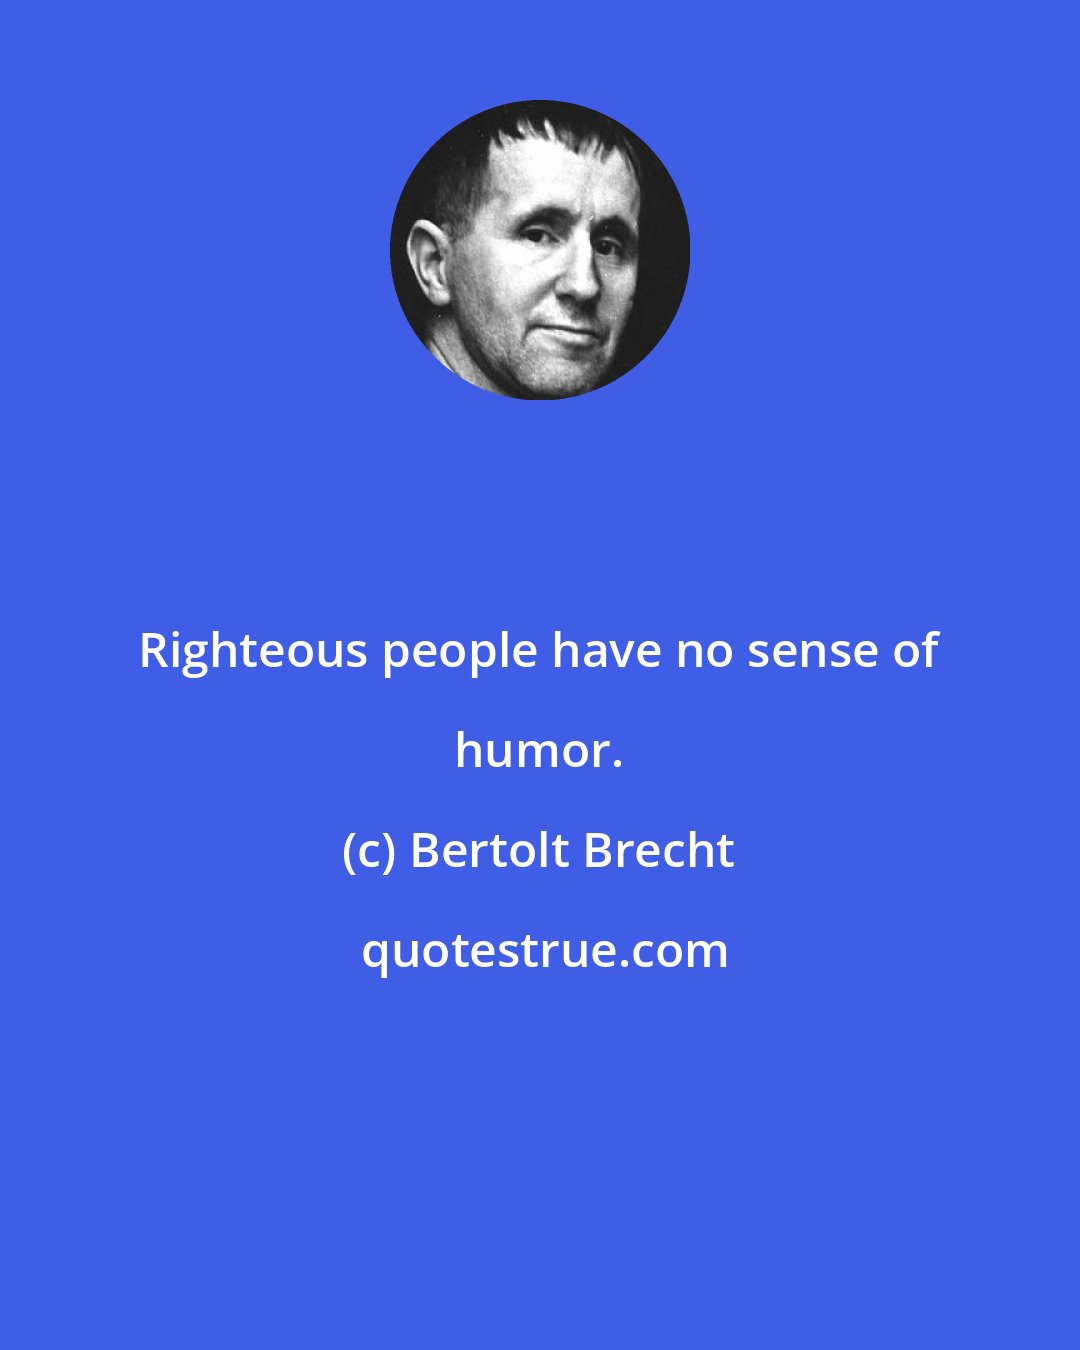 Bertolt Brecht: Righteous people have no sense of humor.